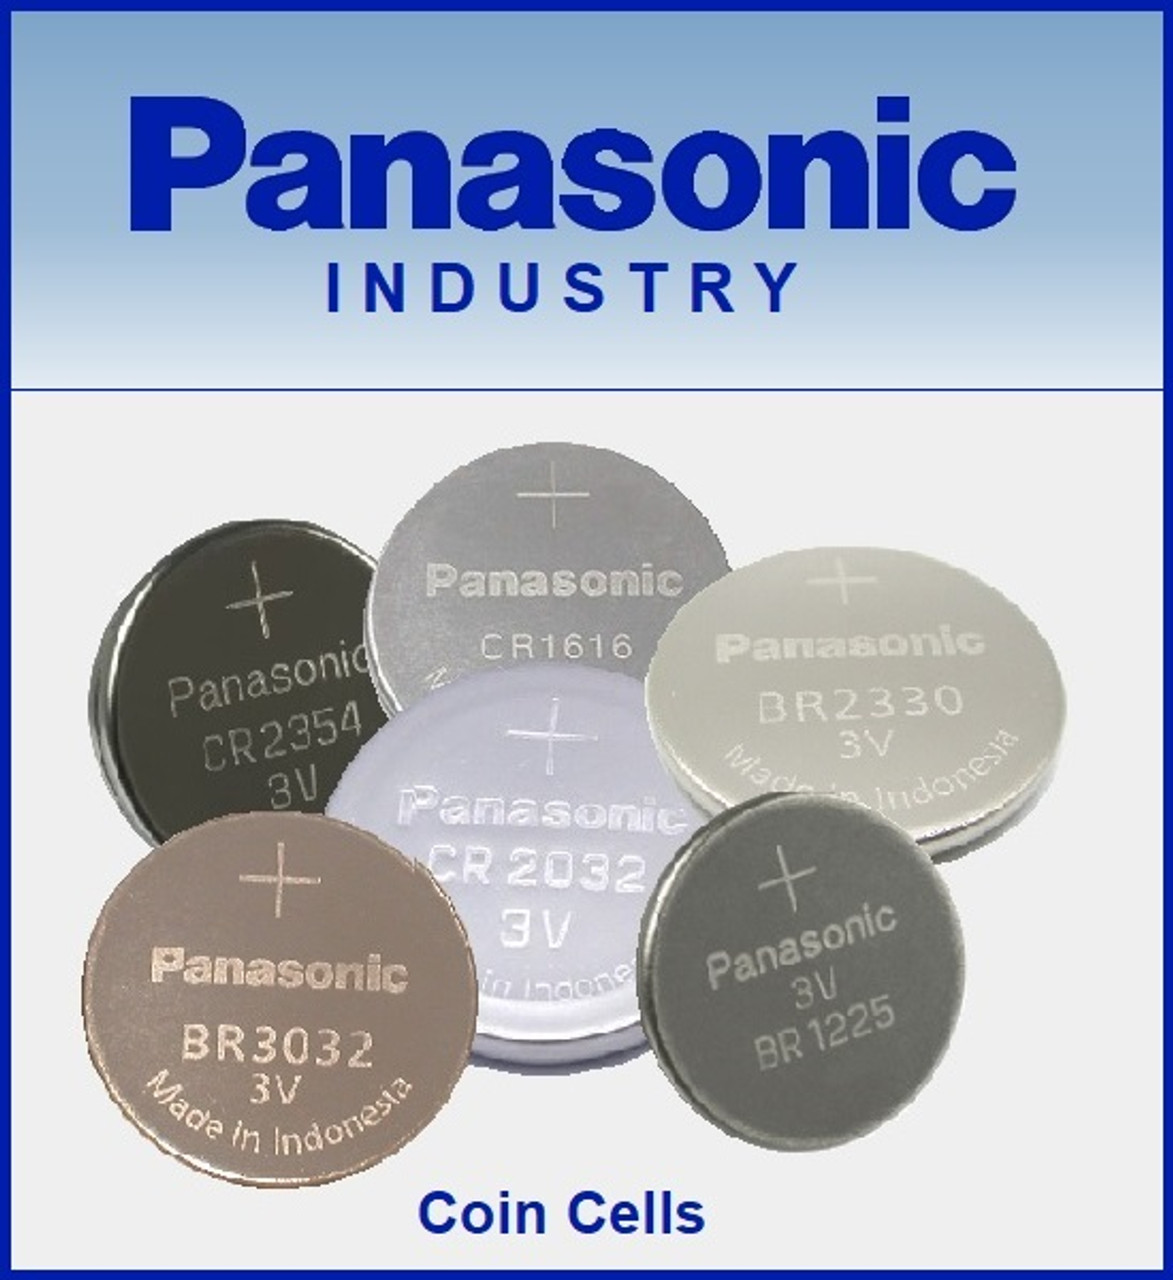 Panasonic CR1616 Lithium Coin Cell Battery - Bulk